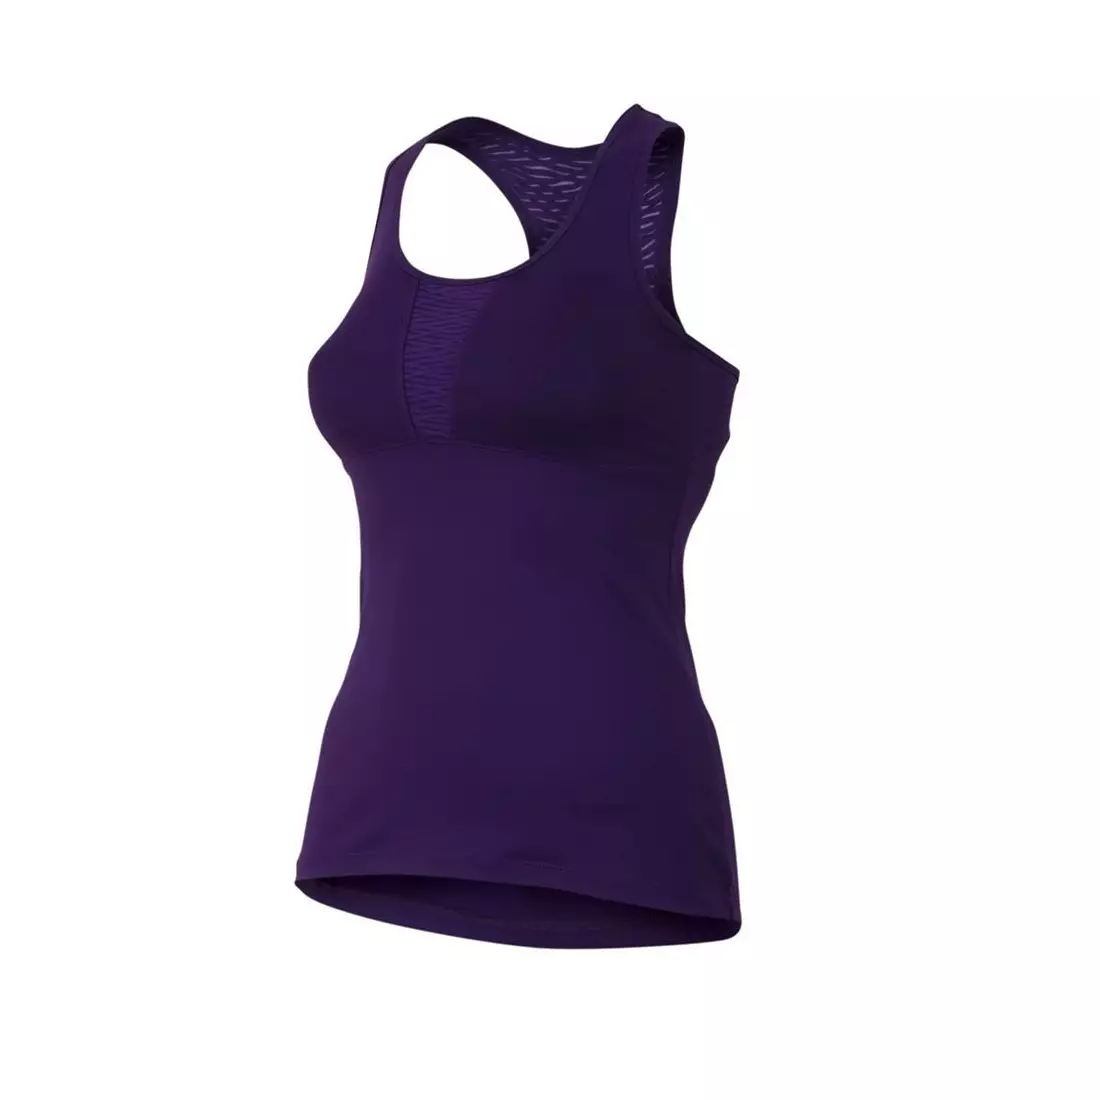 PEARL IZUMI - 12221405-3ZW FLY SPORT TANK - women's running T-shirt, color: Purple